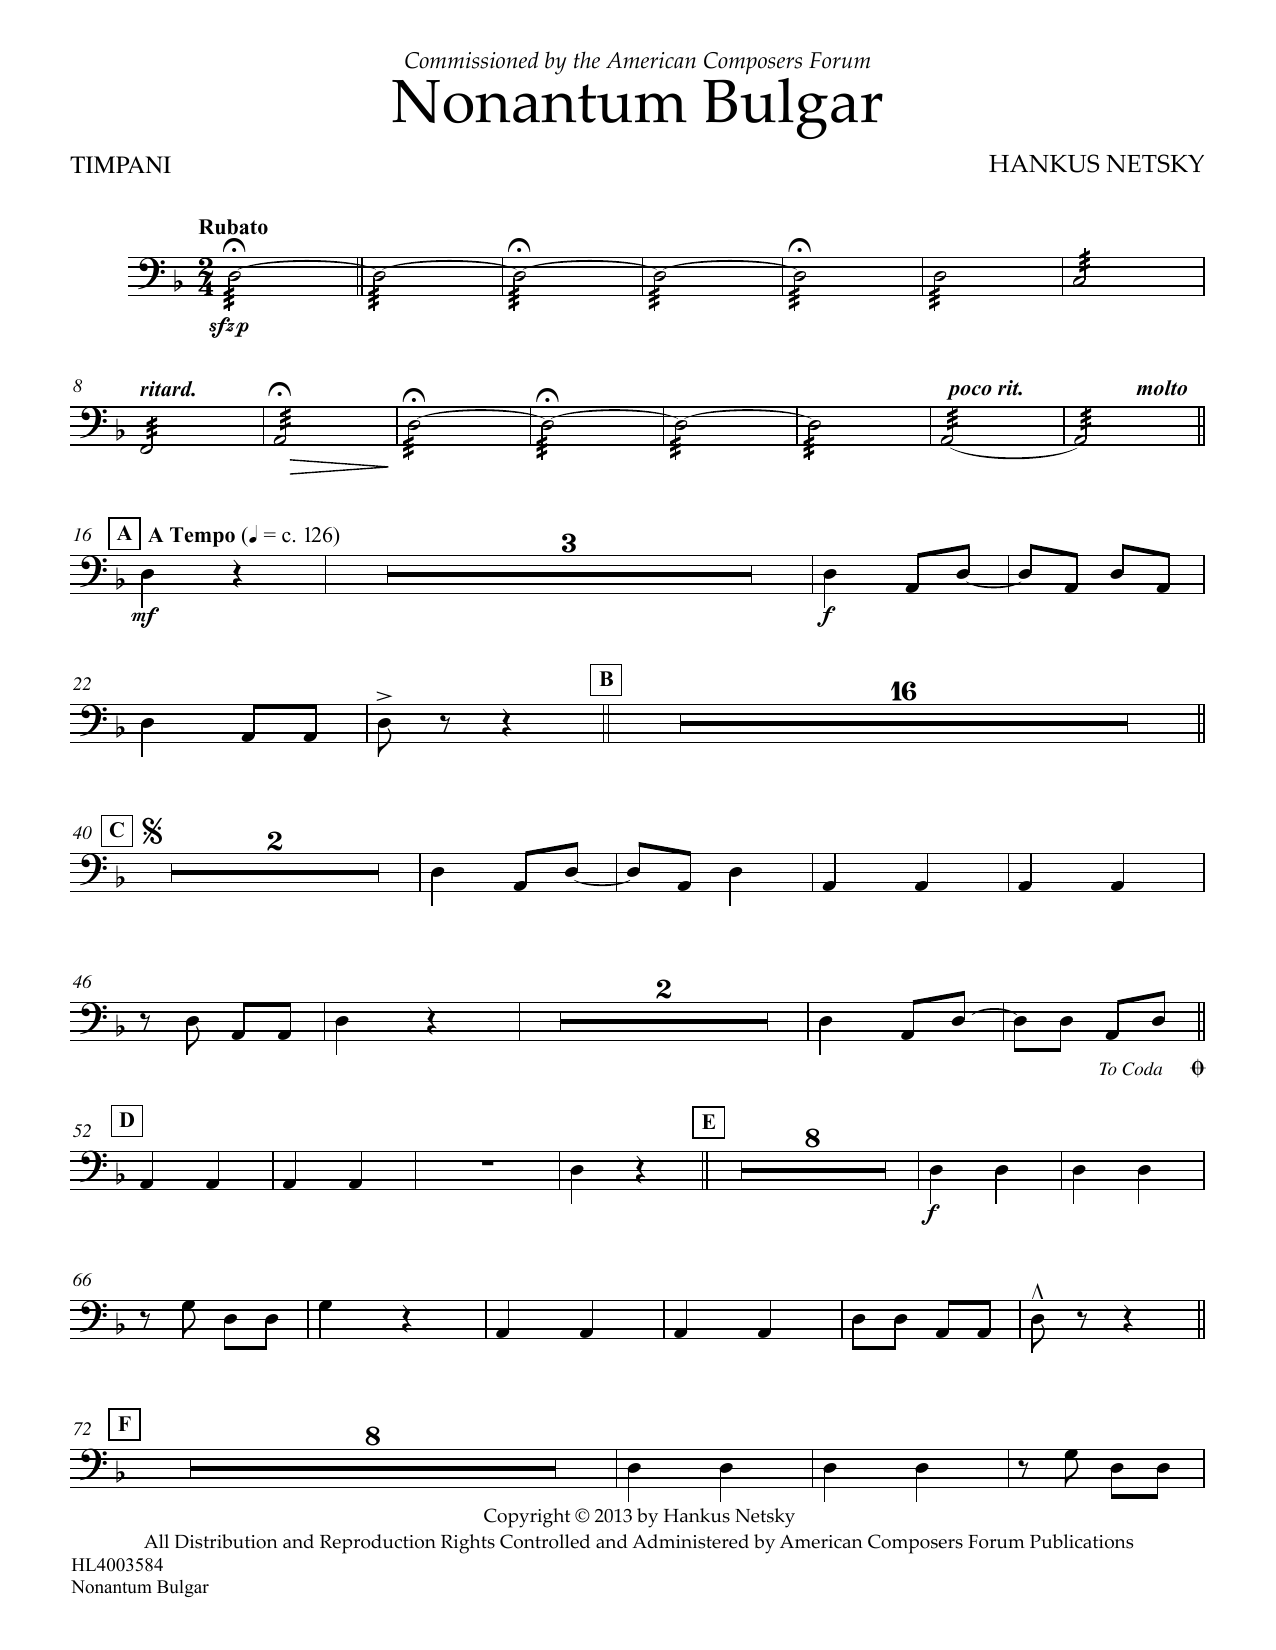 Hankus Netsky Nonantum Bulgar - Timpani Sheet Music Notes & Chords for Concert Band - Download or Print PDF